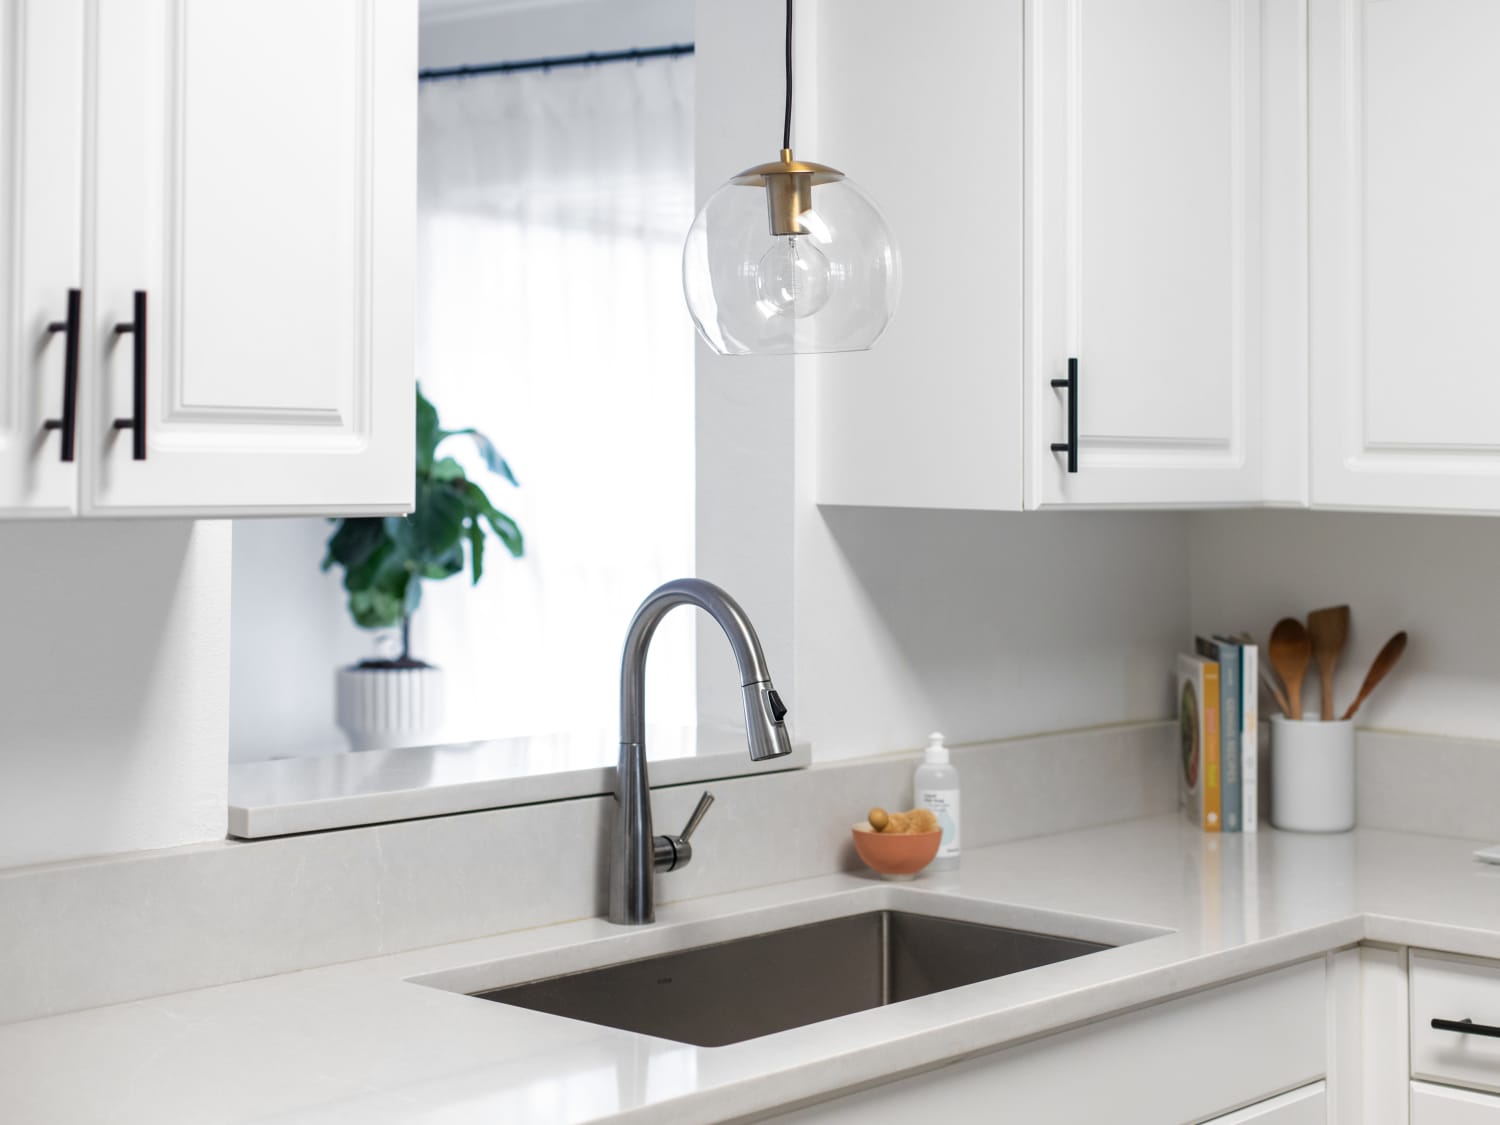 gray theme kitchen pendant light over kitchen sink